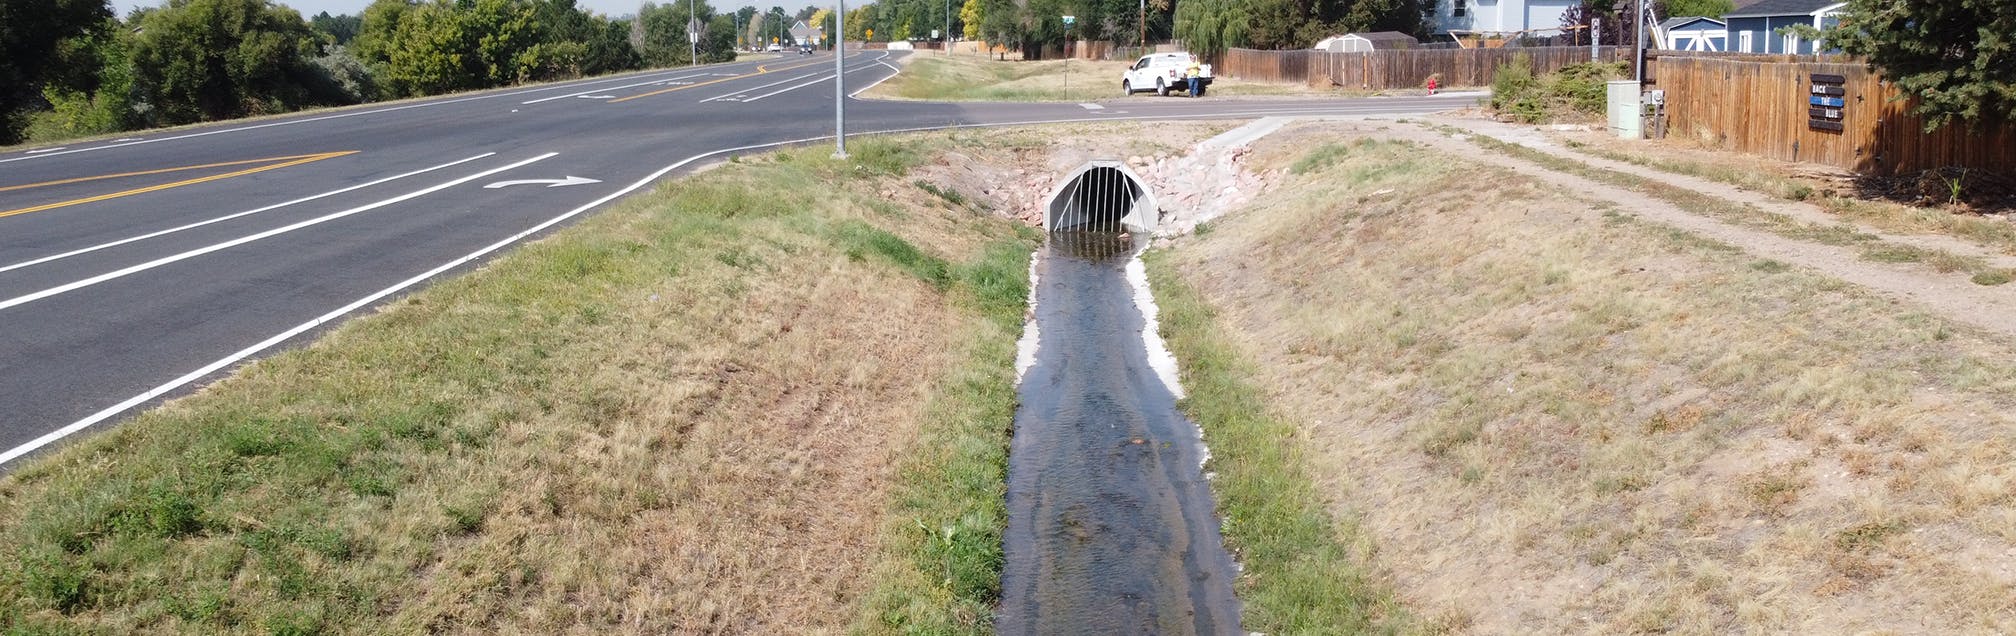 Storm drain inlet